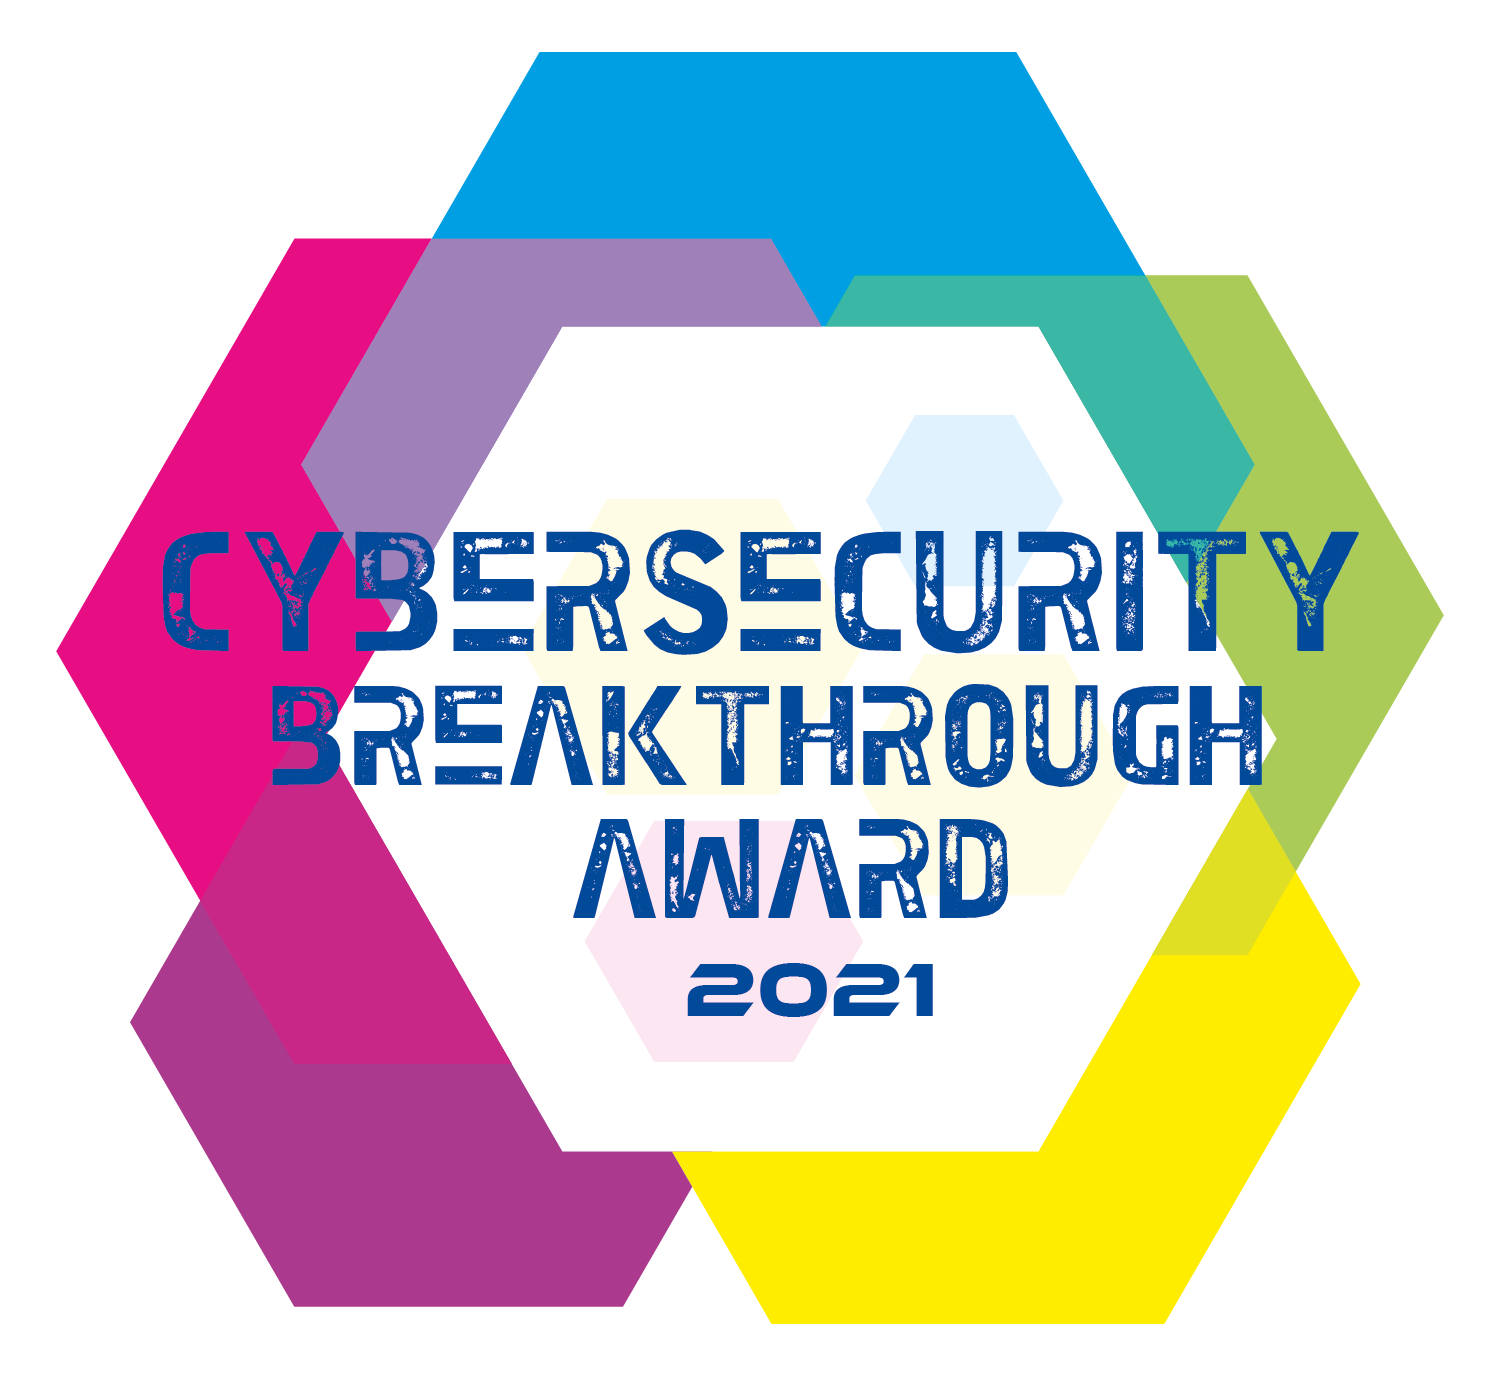 Breakthrough Award 2021